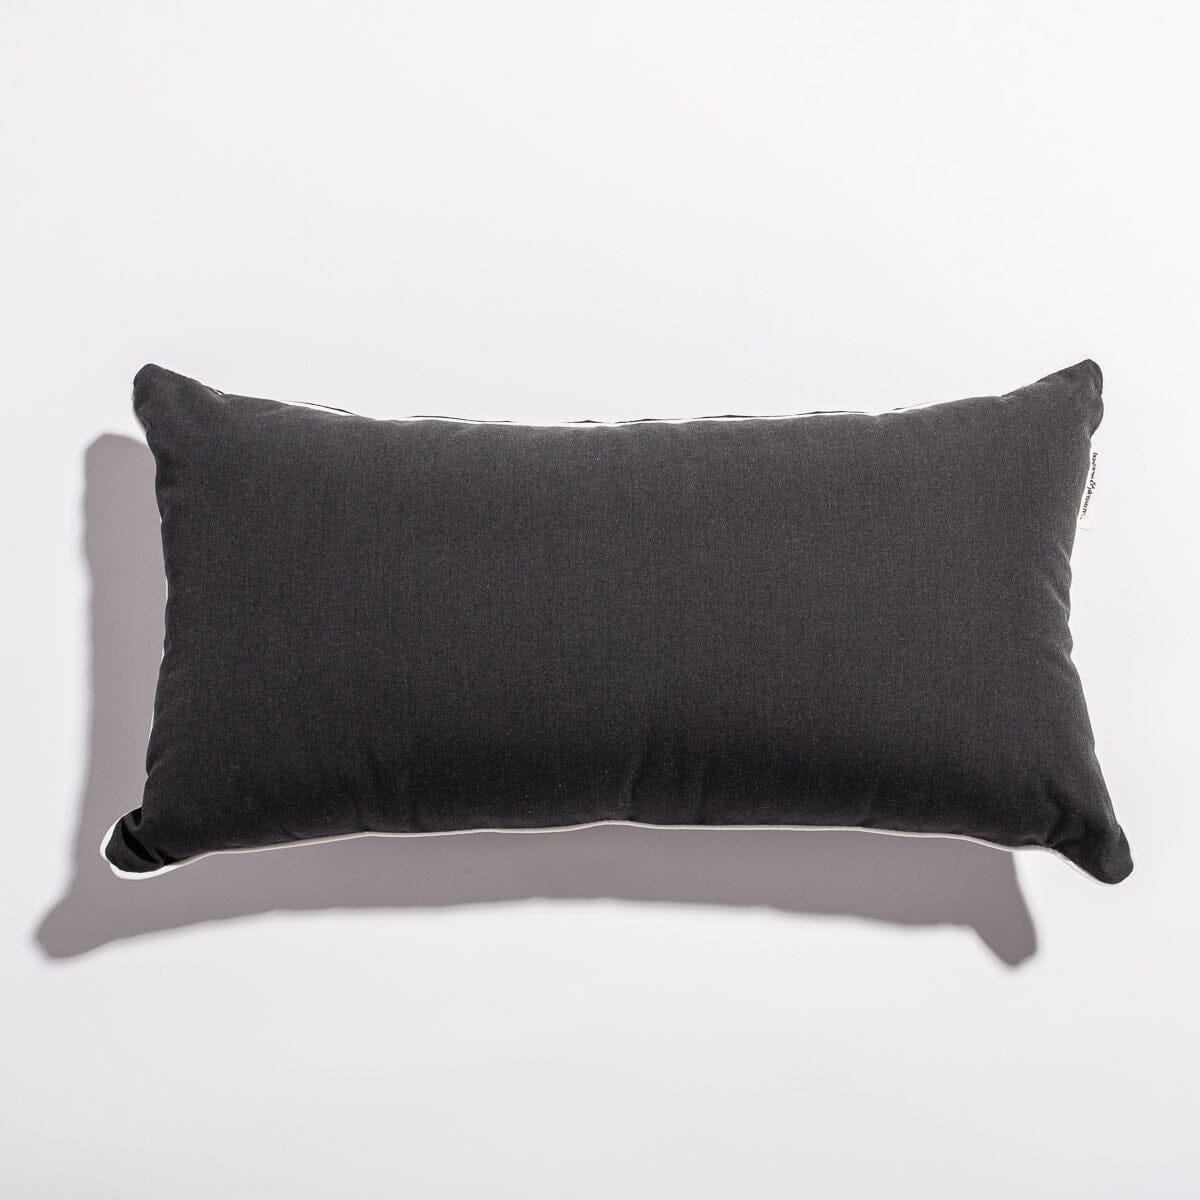 The Rectangle Throw Pillow - Rivie Black Rectangle Throw Pillow Business & Pleasure Co 